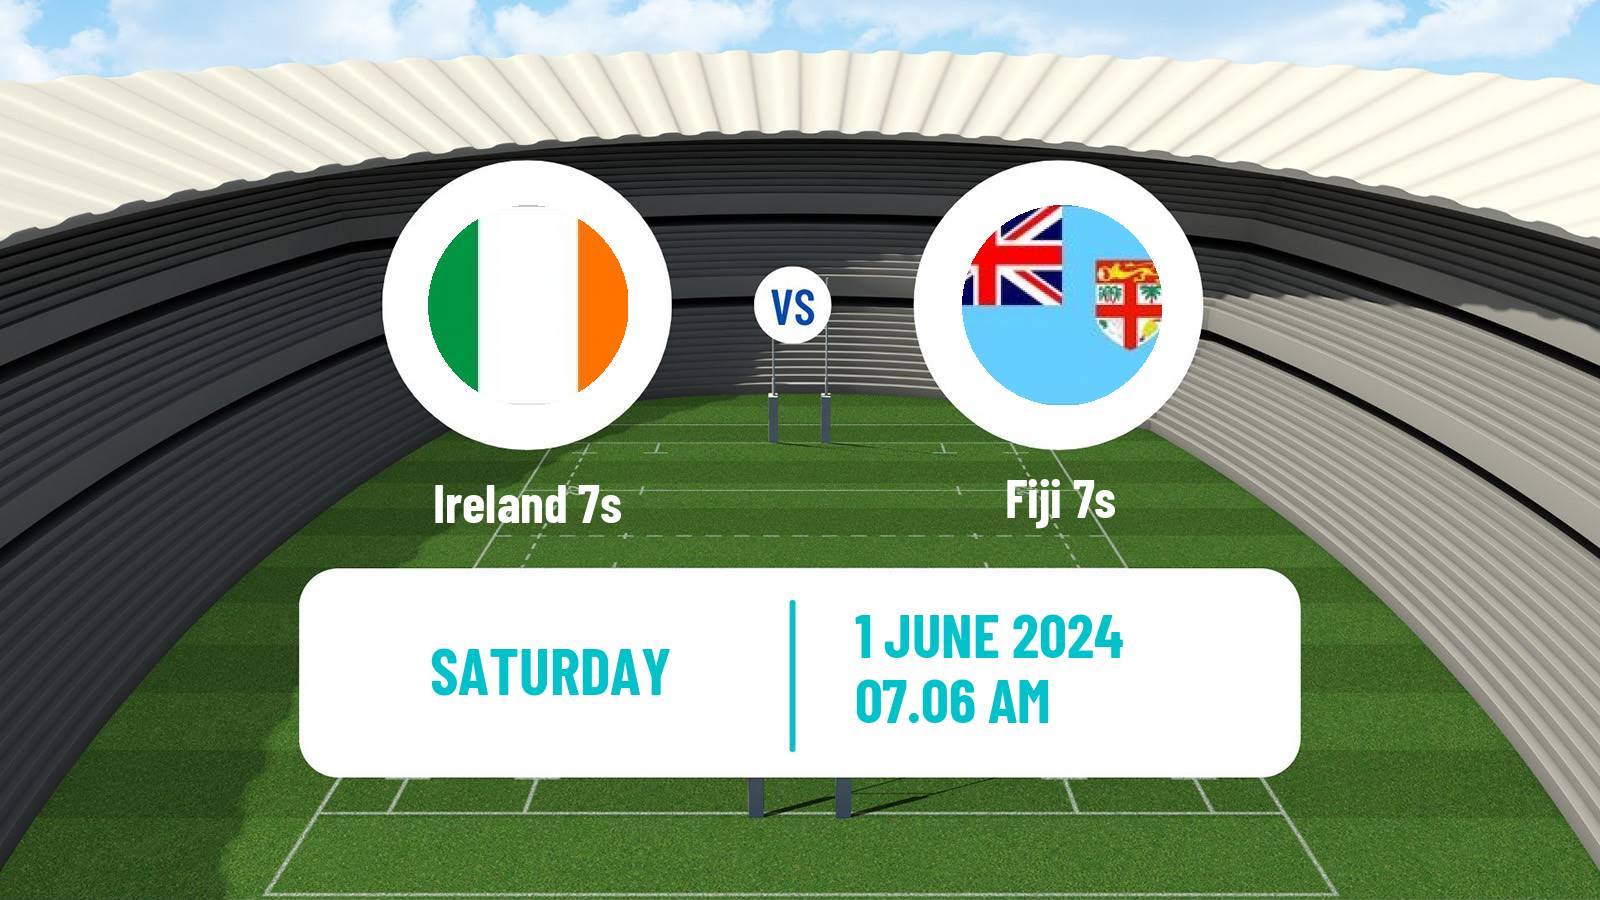 Rugby union Sevens World Series - Spain Ireland 7s - Fiji 7s